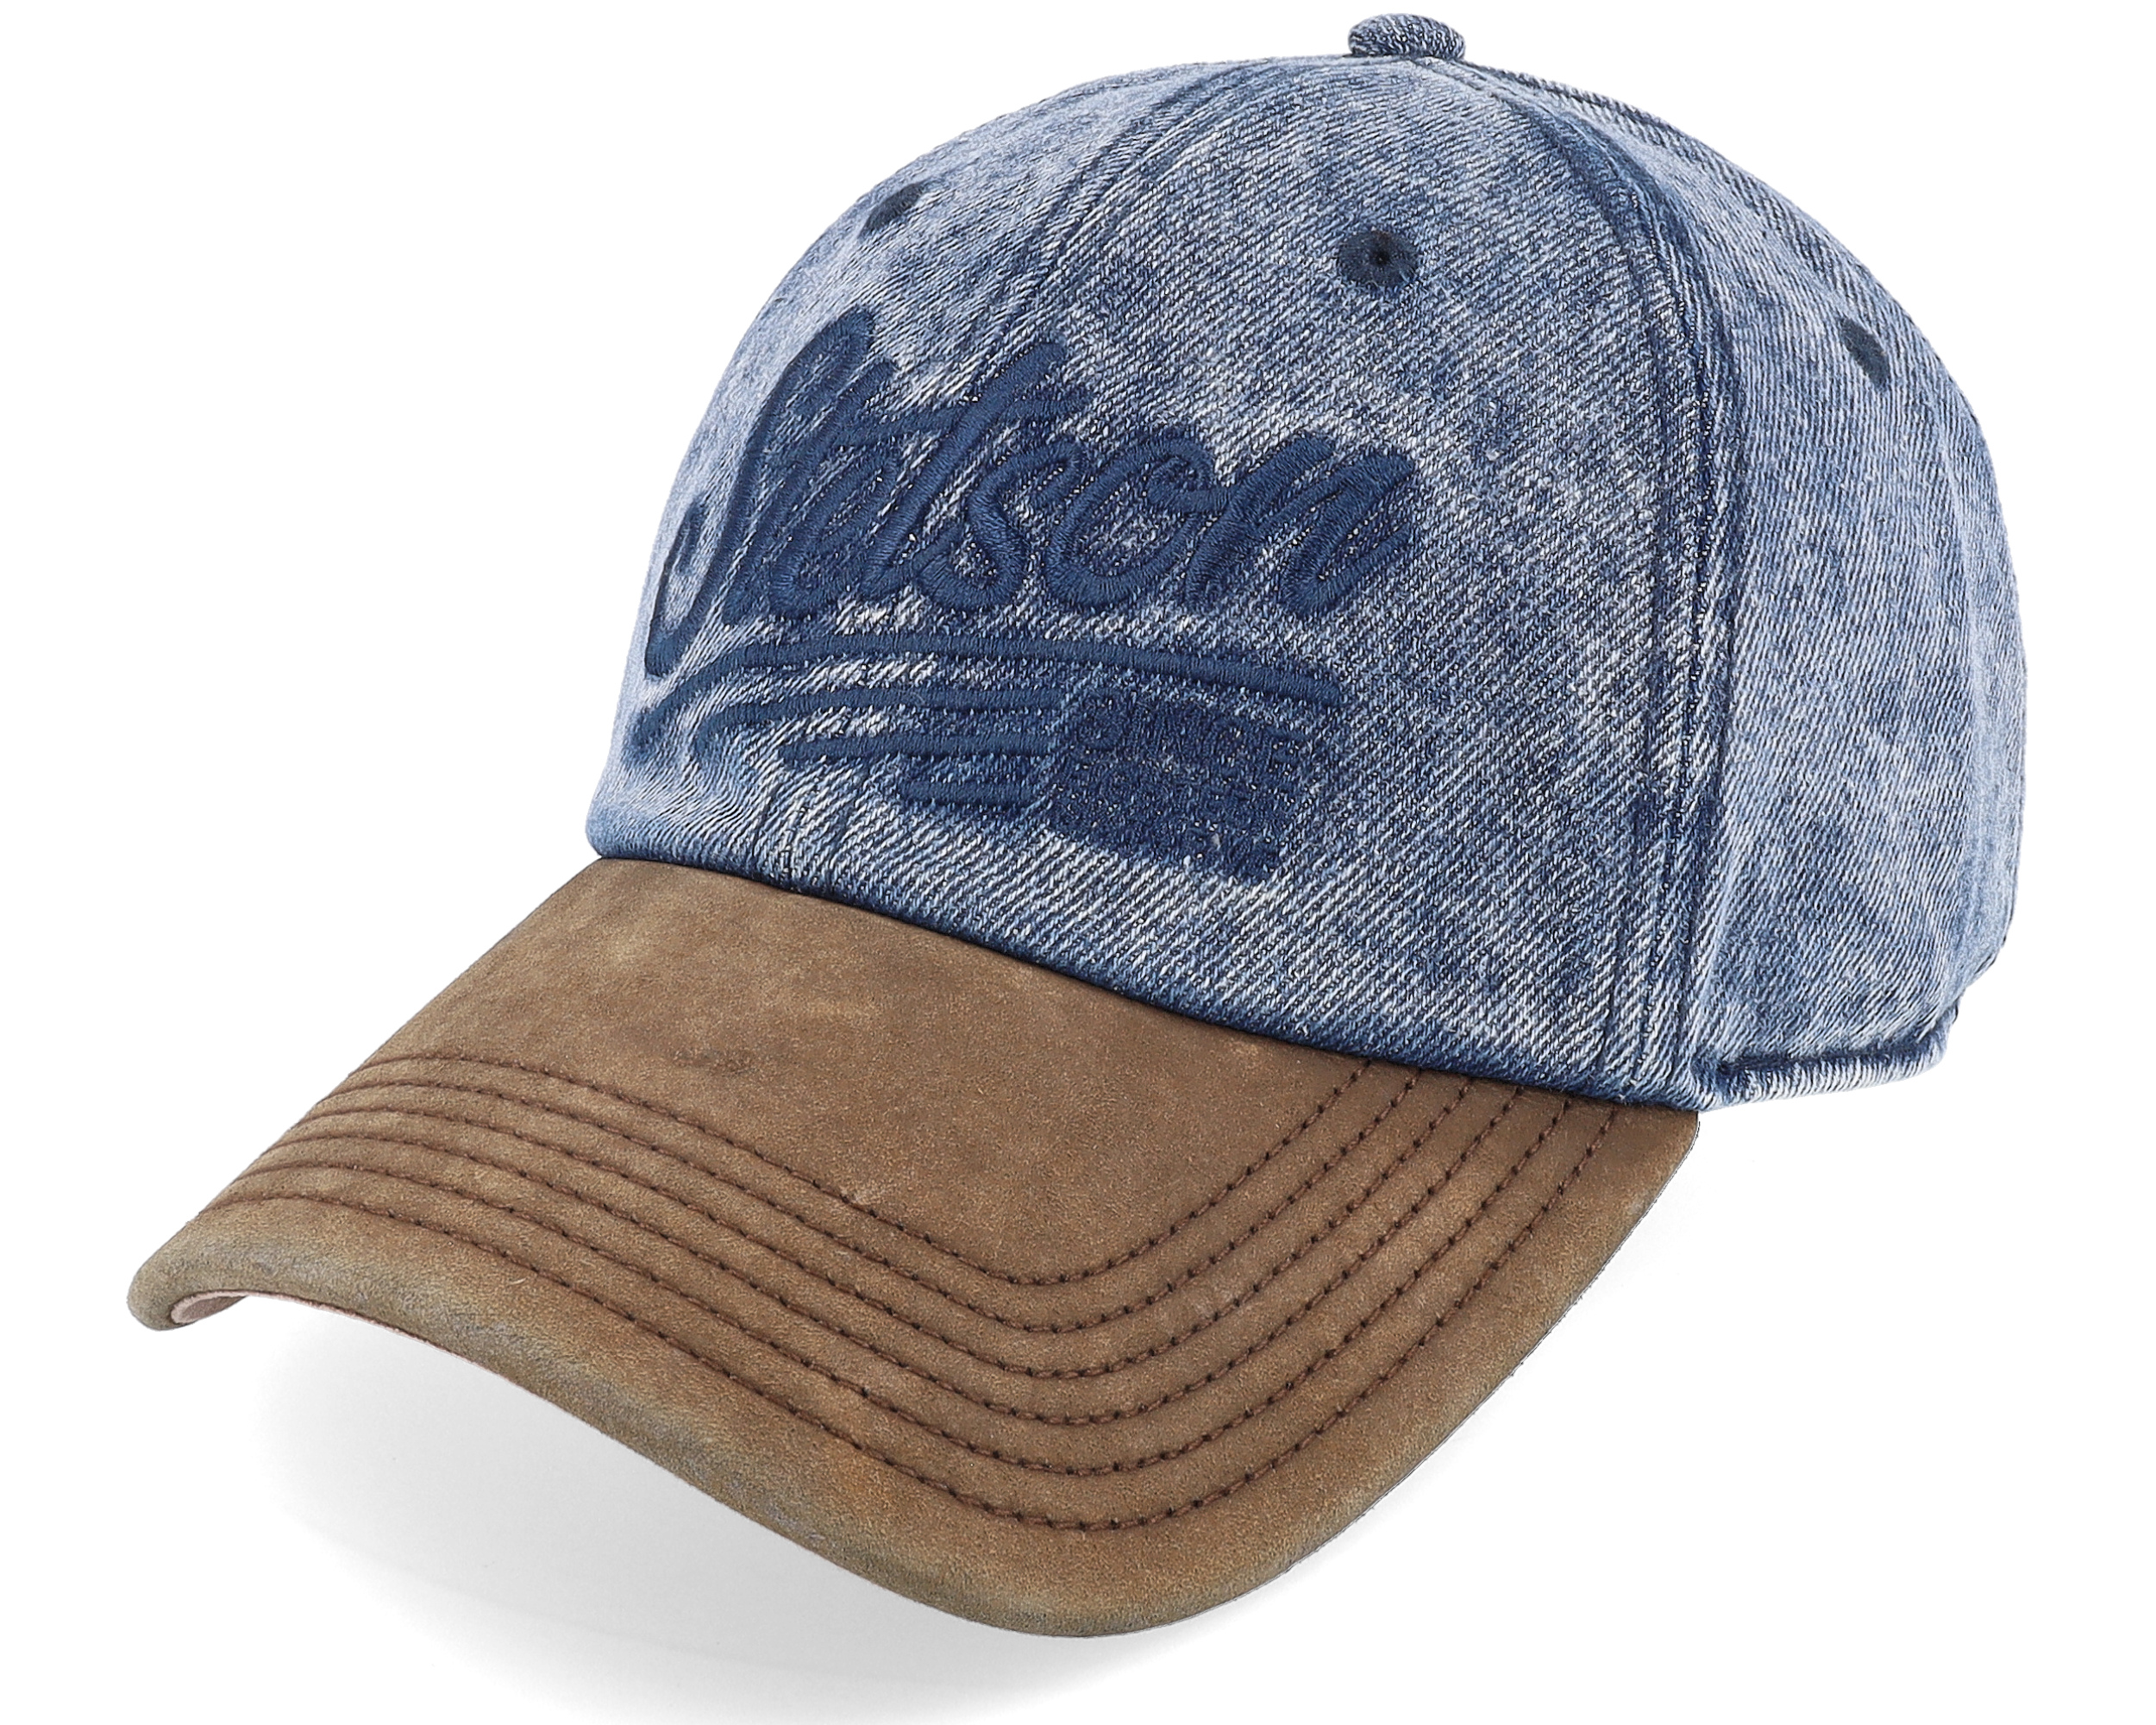 Braves Vintage Distressed Trucker Hat